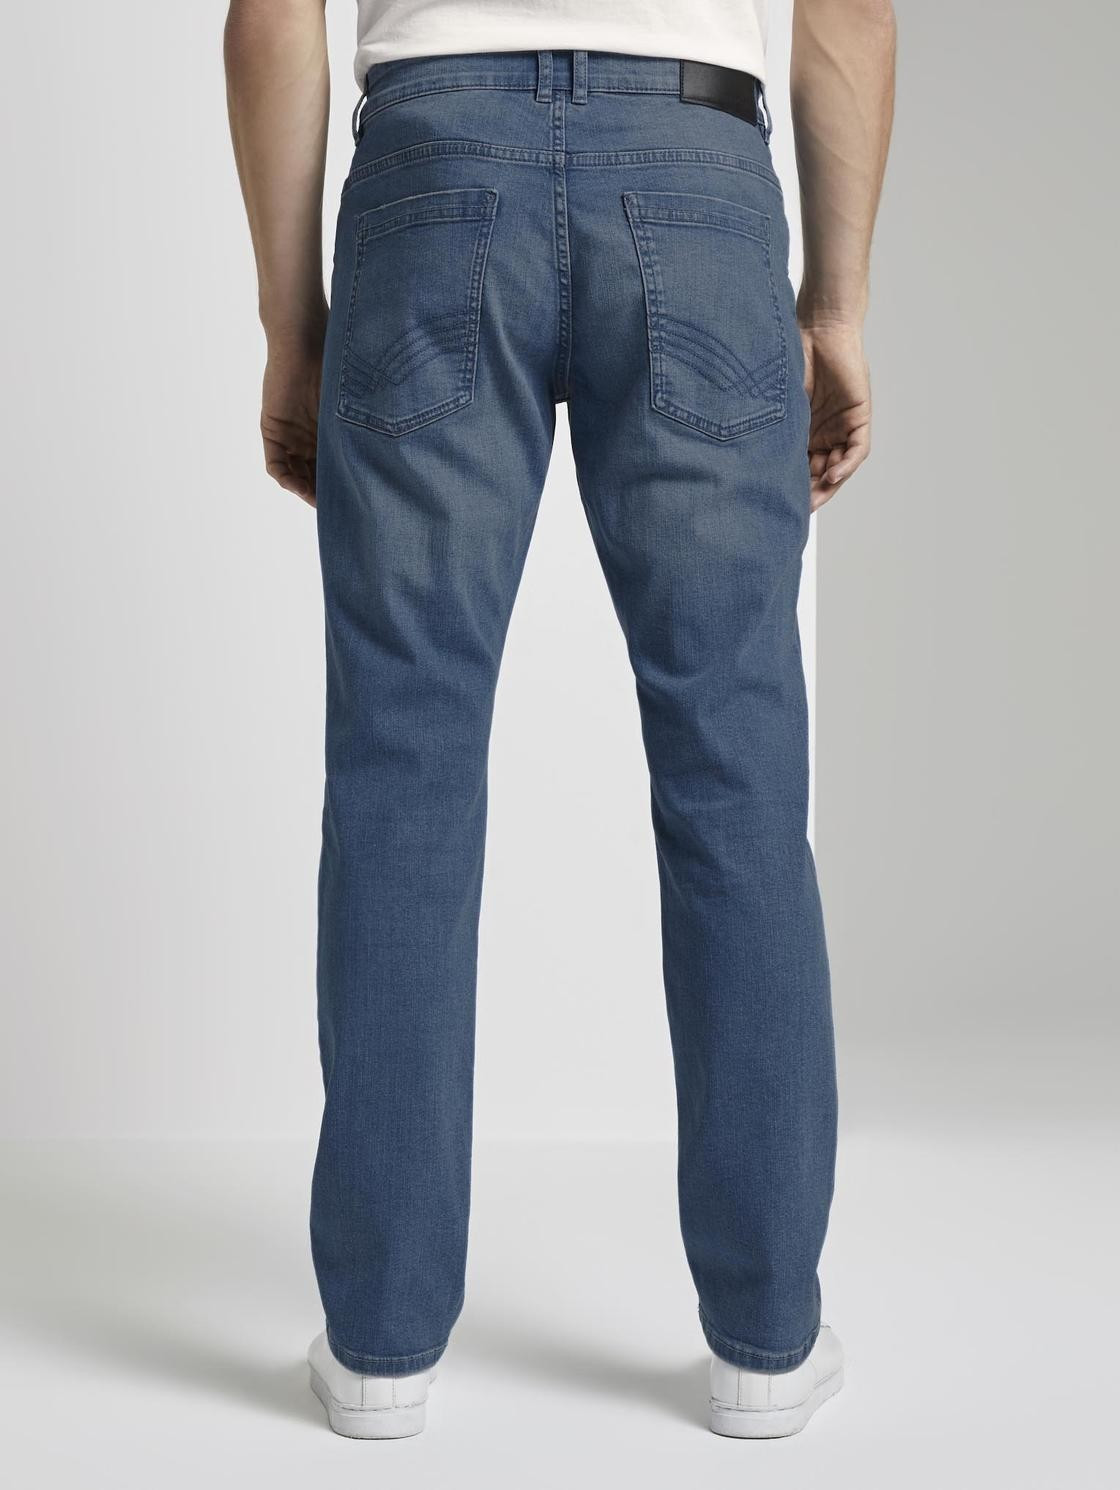 denim Josh blue | Tom 71,76 bleached Regular Tailor ab Jeans bei Preisvergleich (1015984) € used Slim